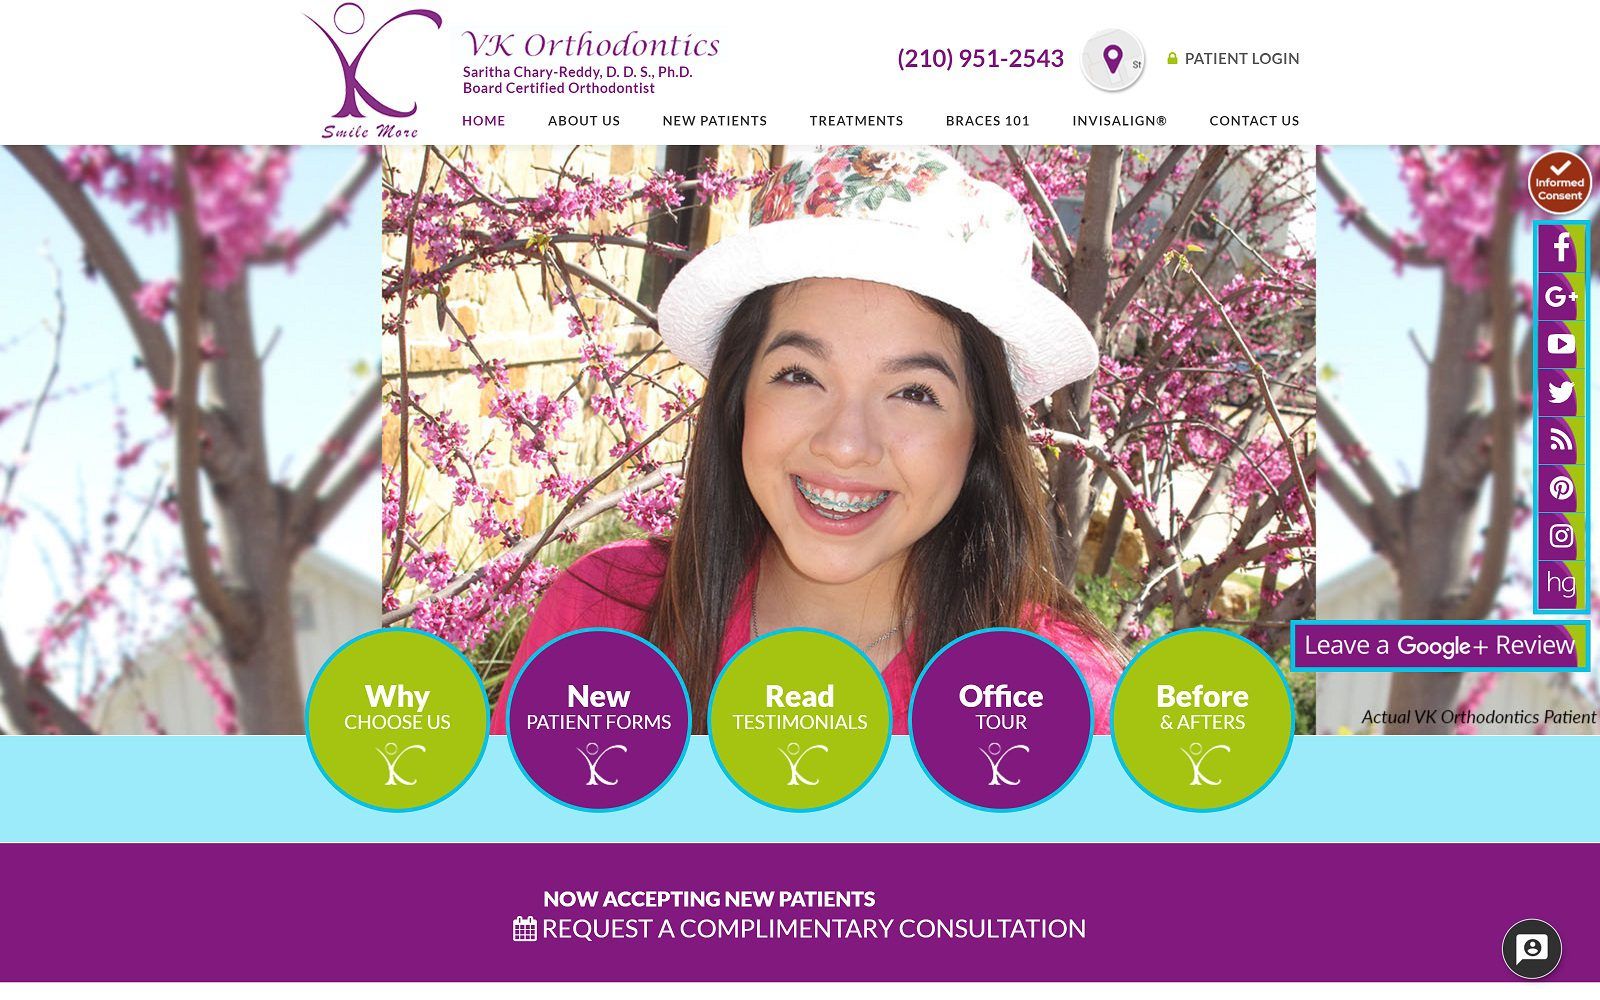 The screenshot of vk orthodontics dr. Chary-reddy website